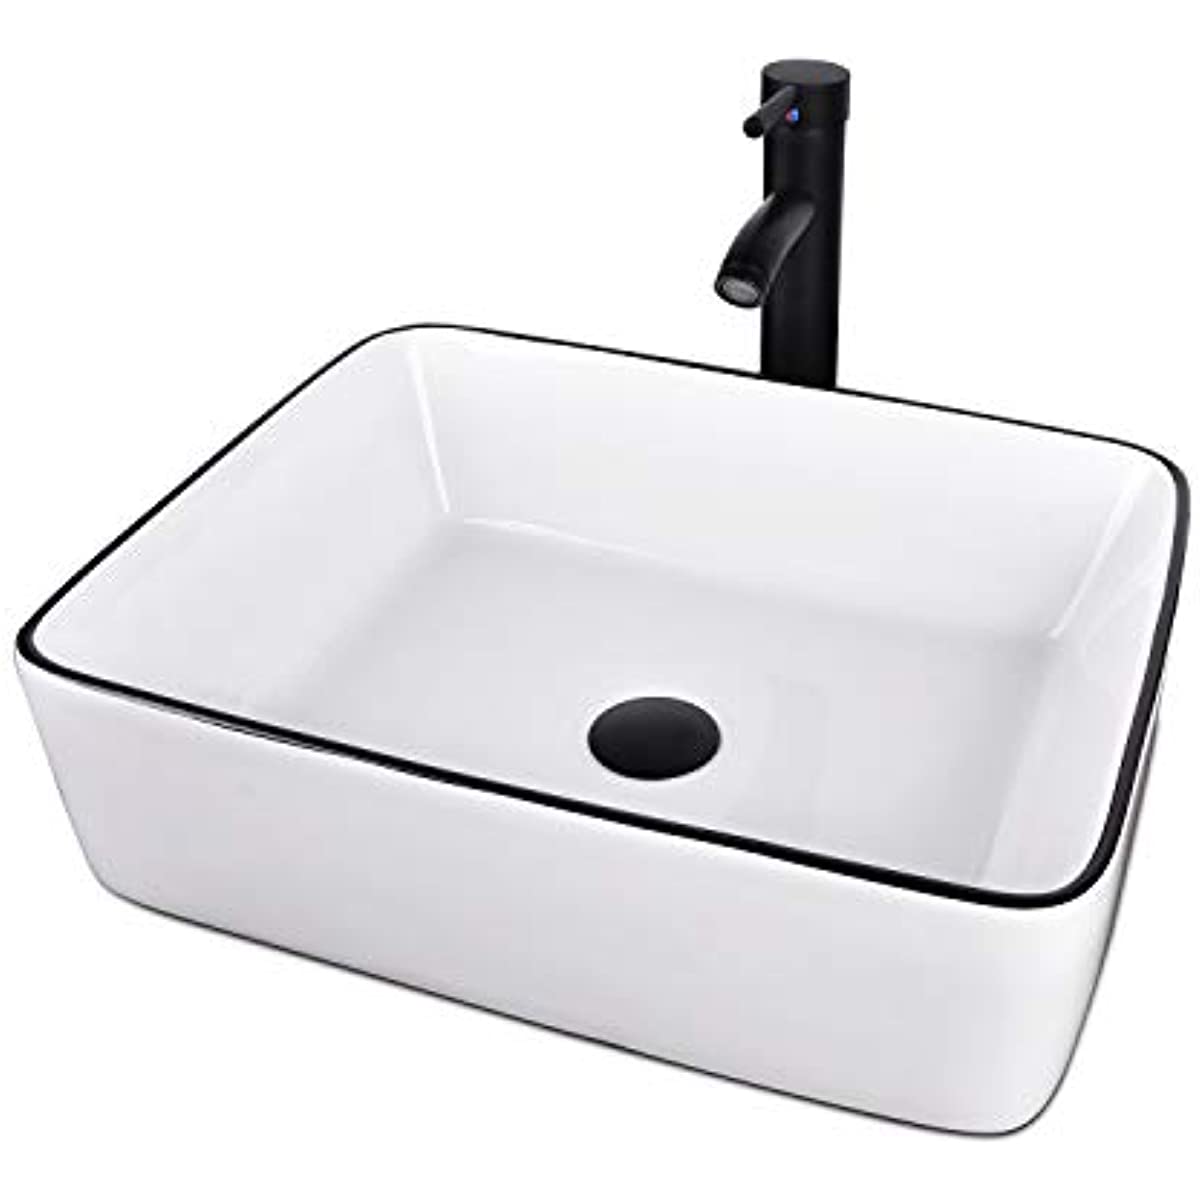 Elecwish white ceramic sink